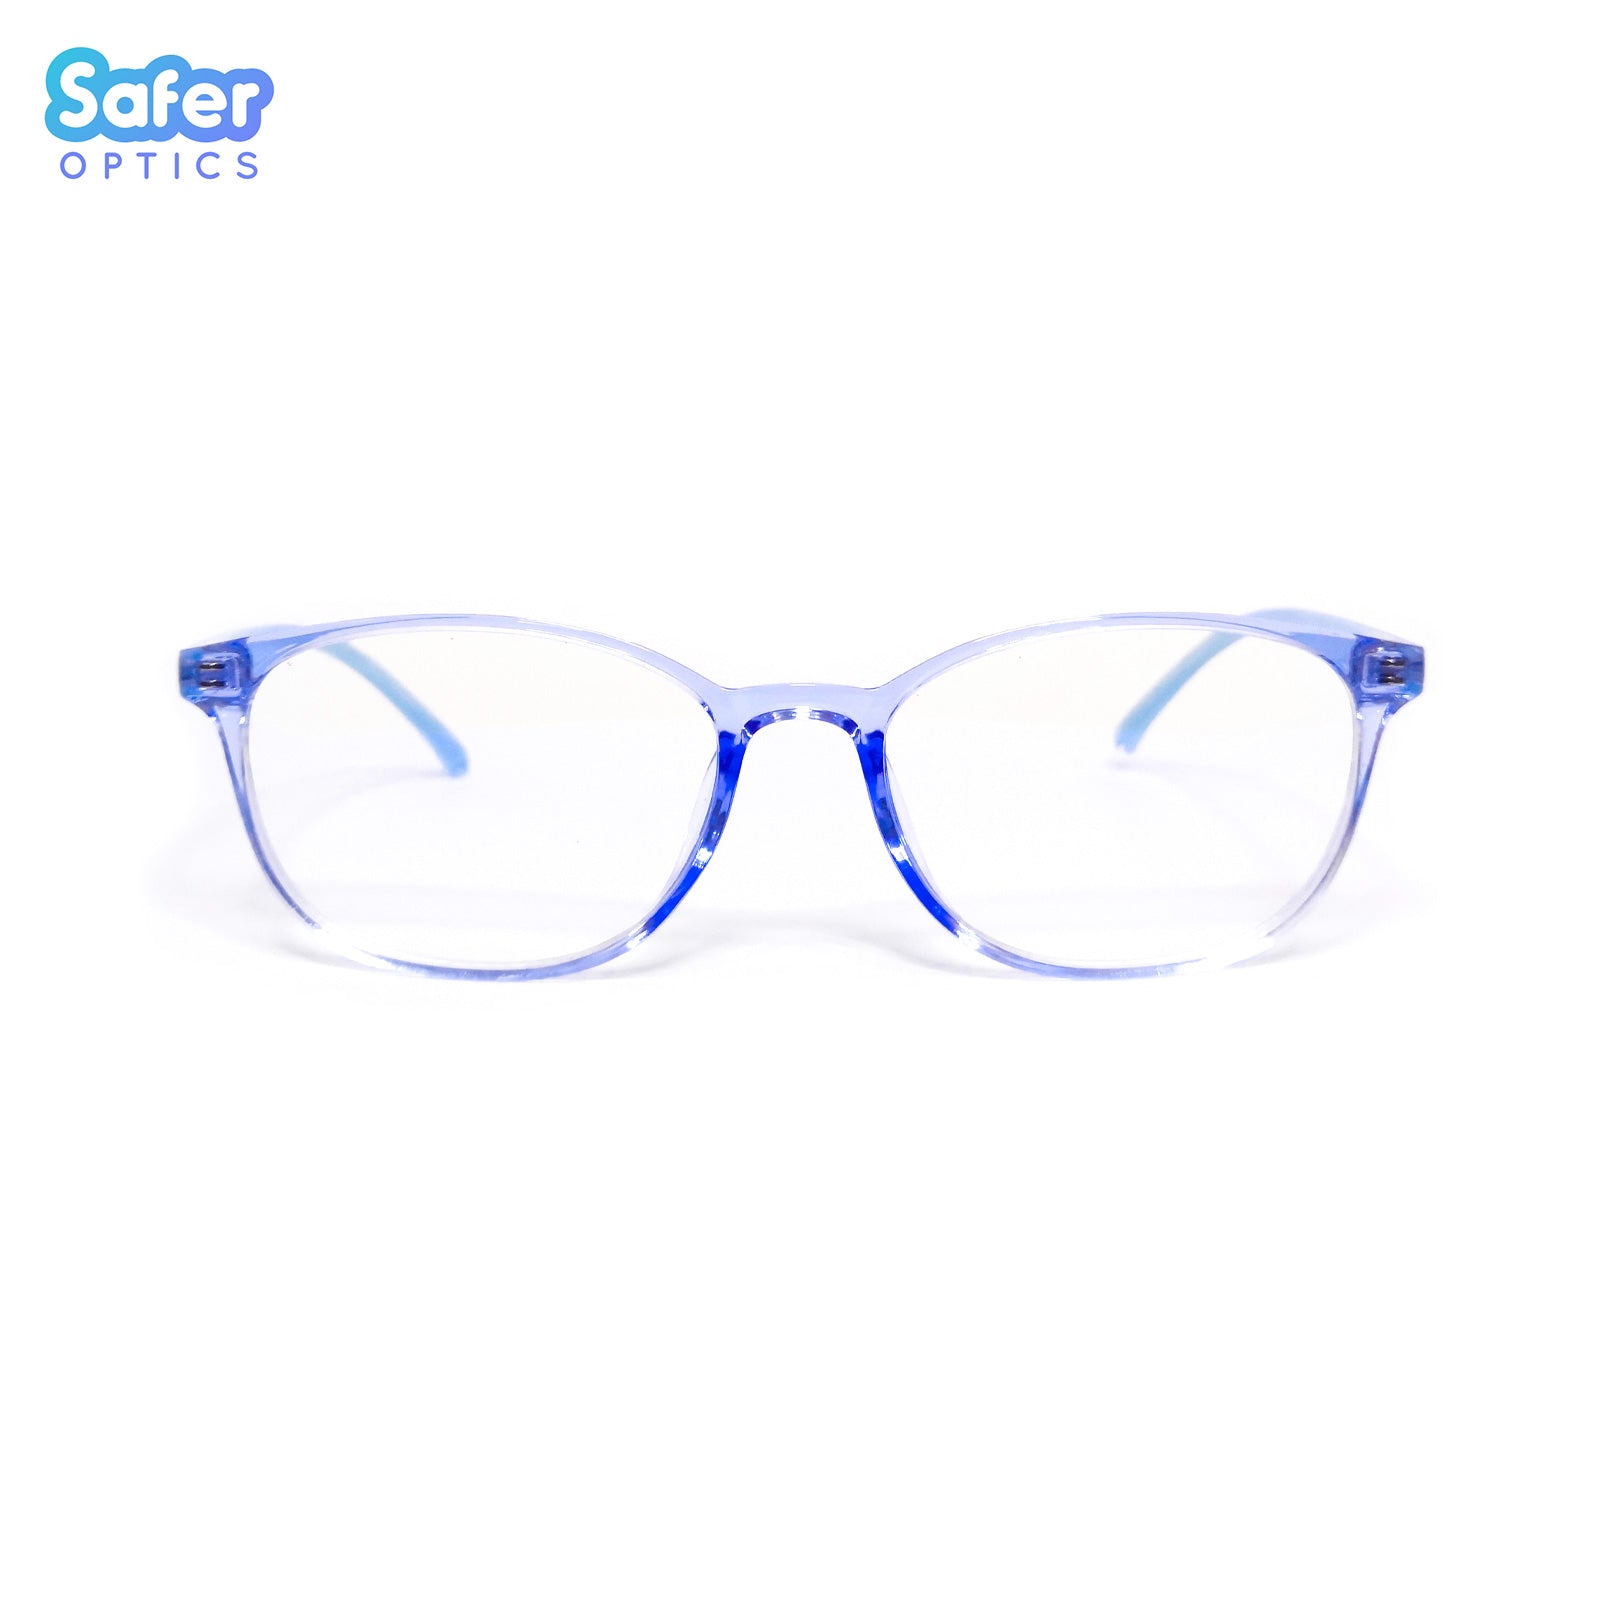 Pioneer - Ice Blue - SaferOptics Anti Blue Light Glasses Malaysia | Adult, Big, Blue, Customize, Lightweight, Medium, Pioneer, Small, Square, White